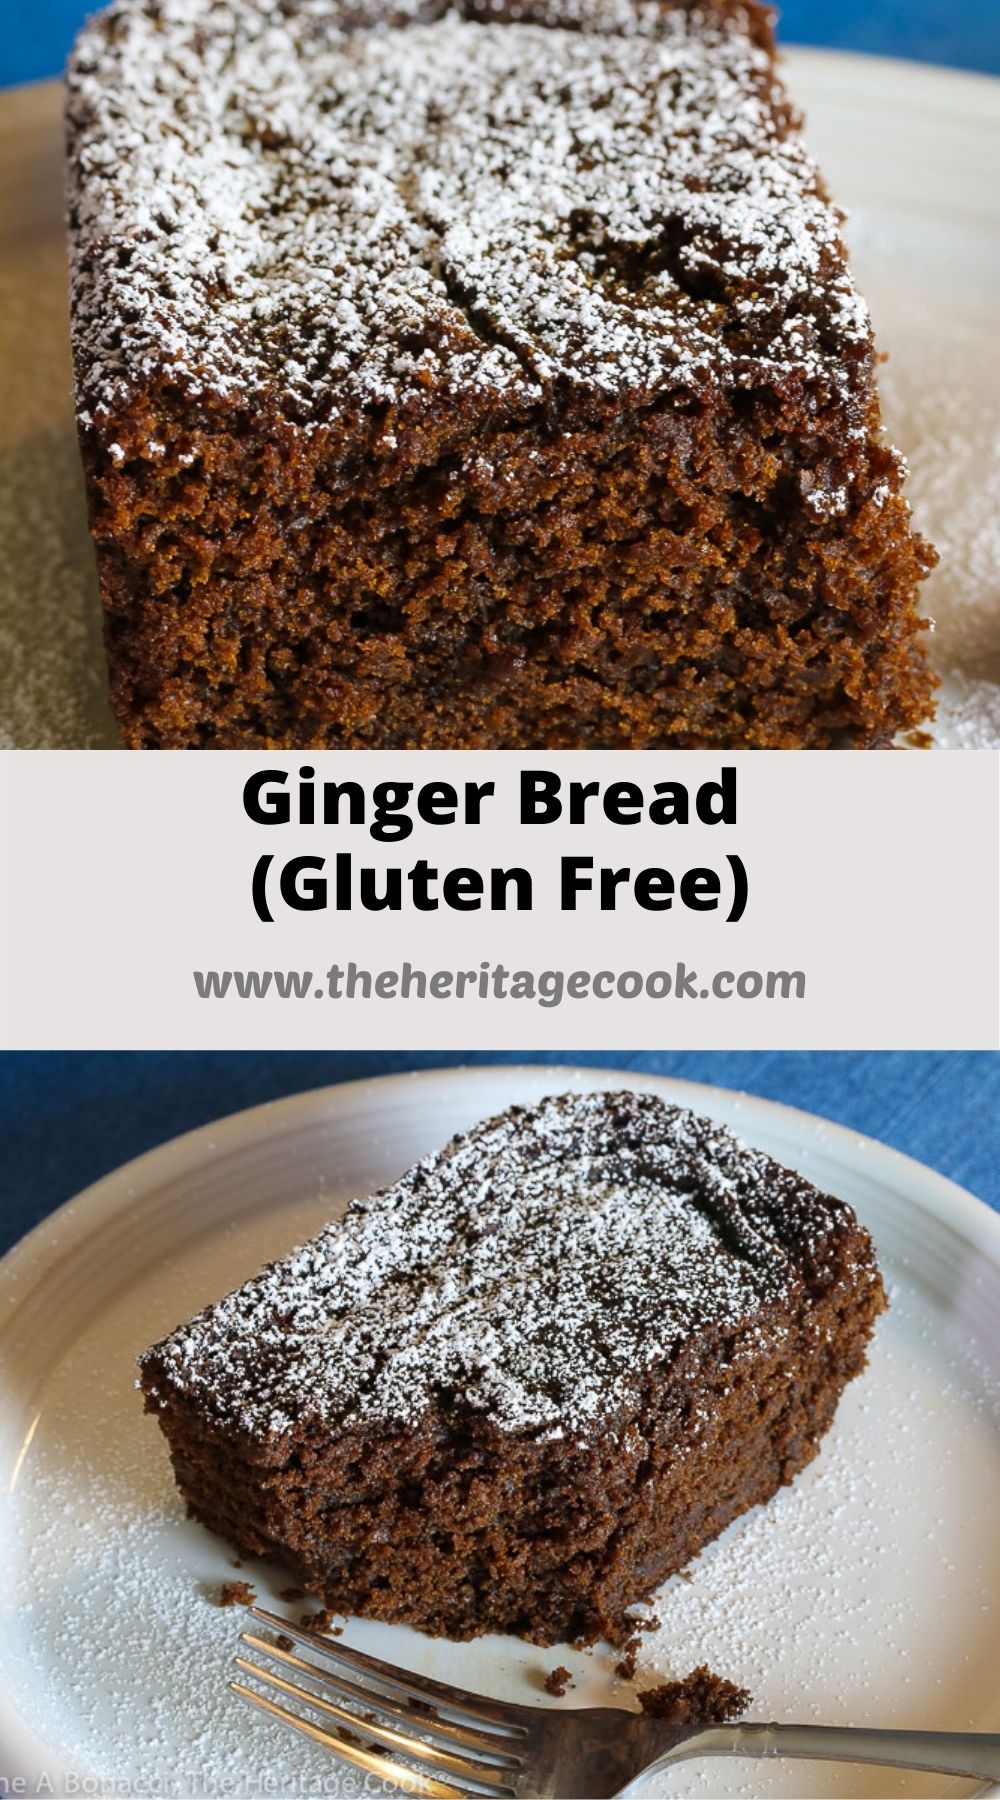 Ginger Bread (Gluten Free) © 2020 Jane Bonacci, The Heritage Cook